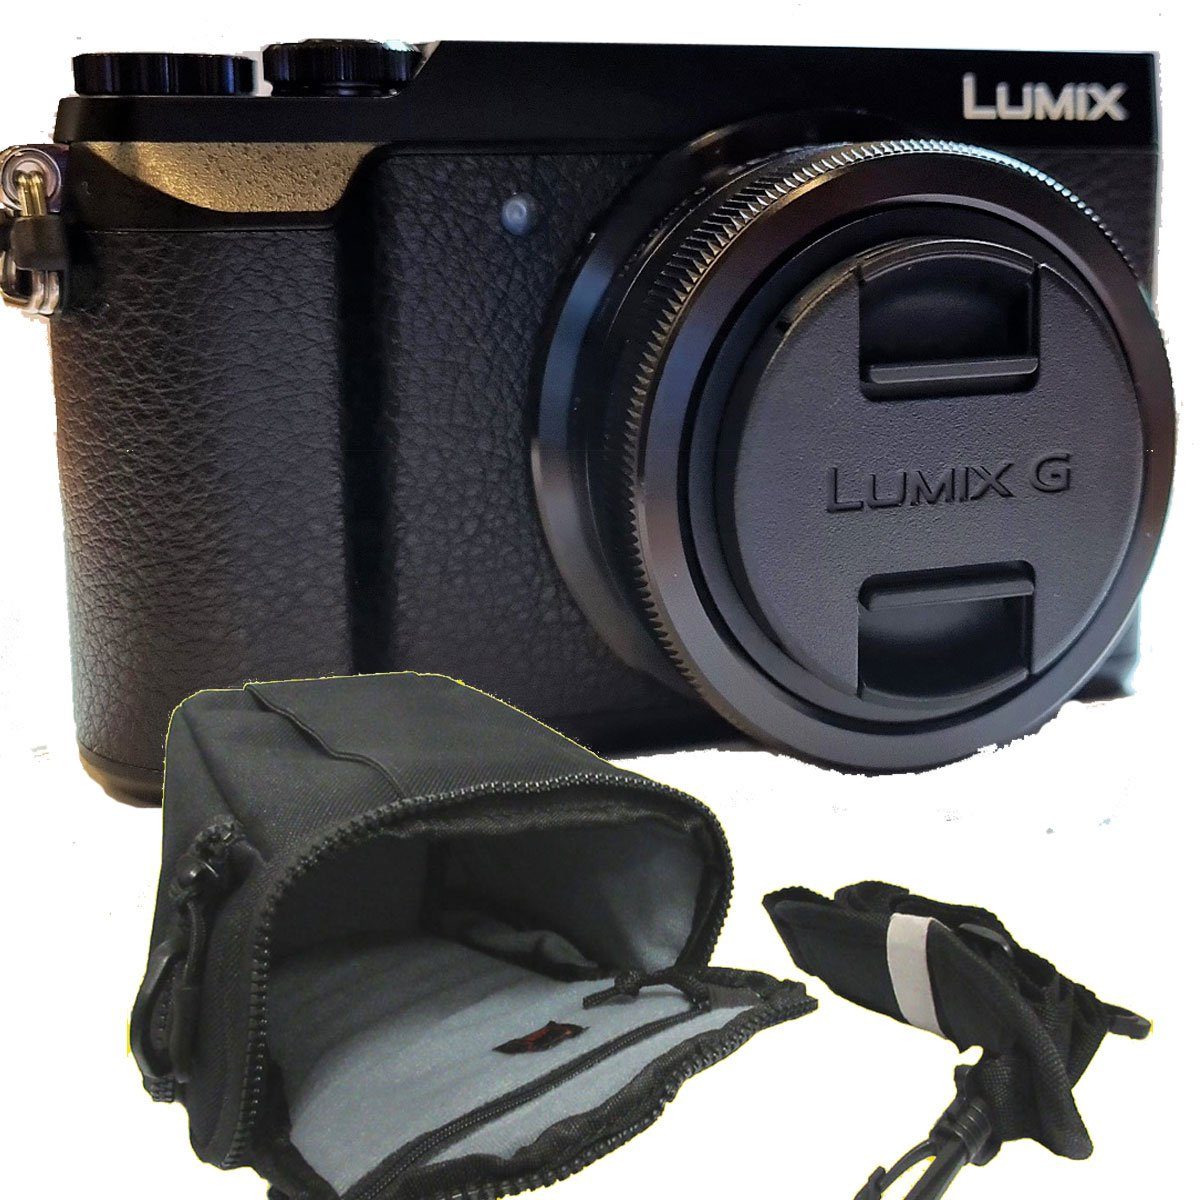 Tasche Lumix Panasonic GX80+3,5-5,6/12-32 Panasonic mm Set Kompaktkamera inklusive schwarz